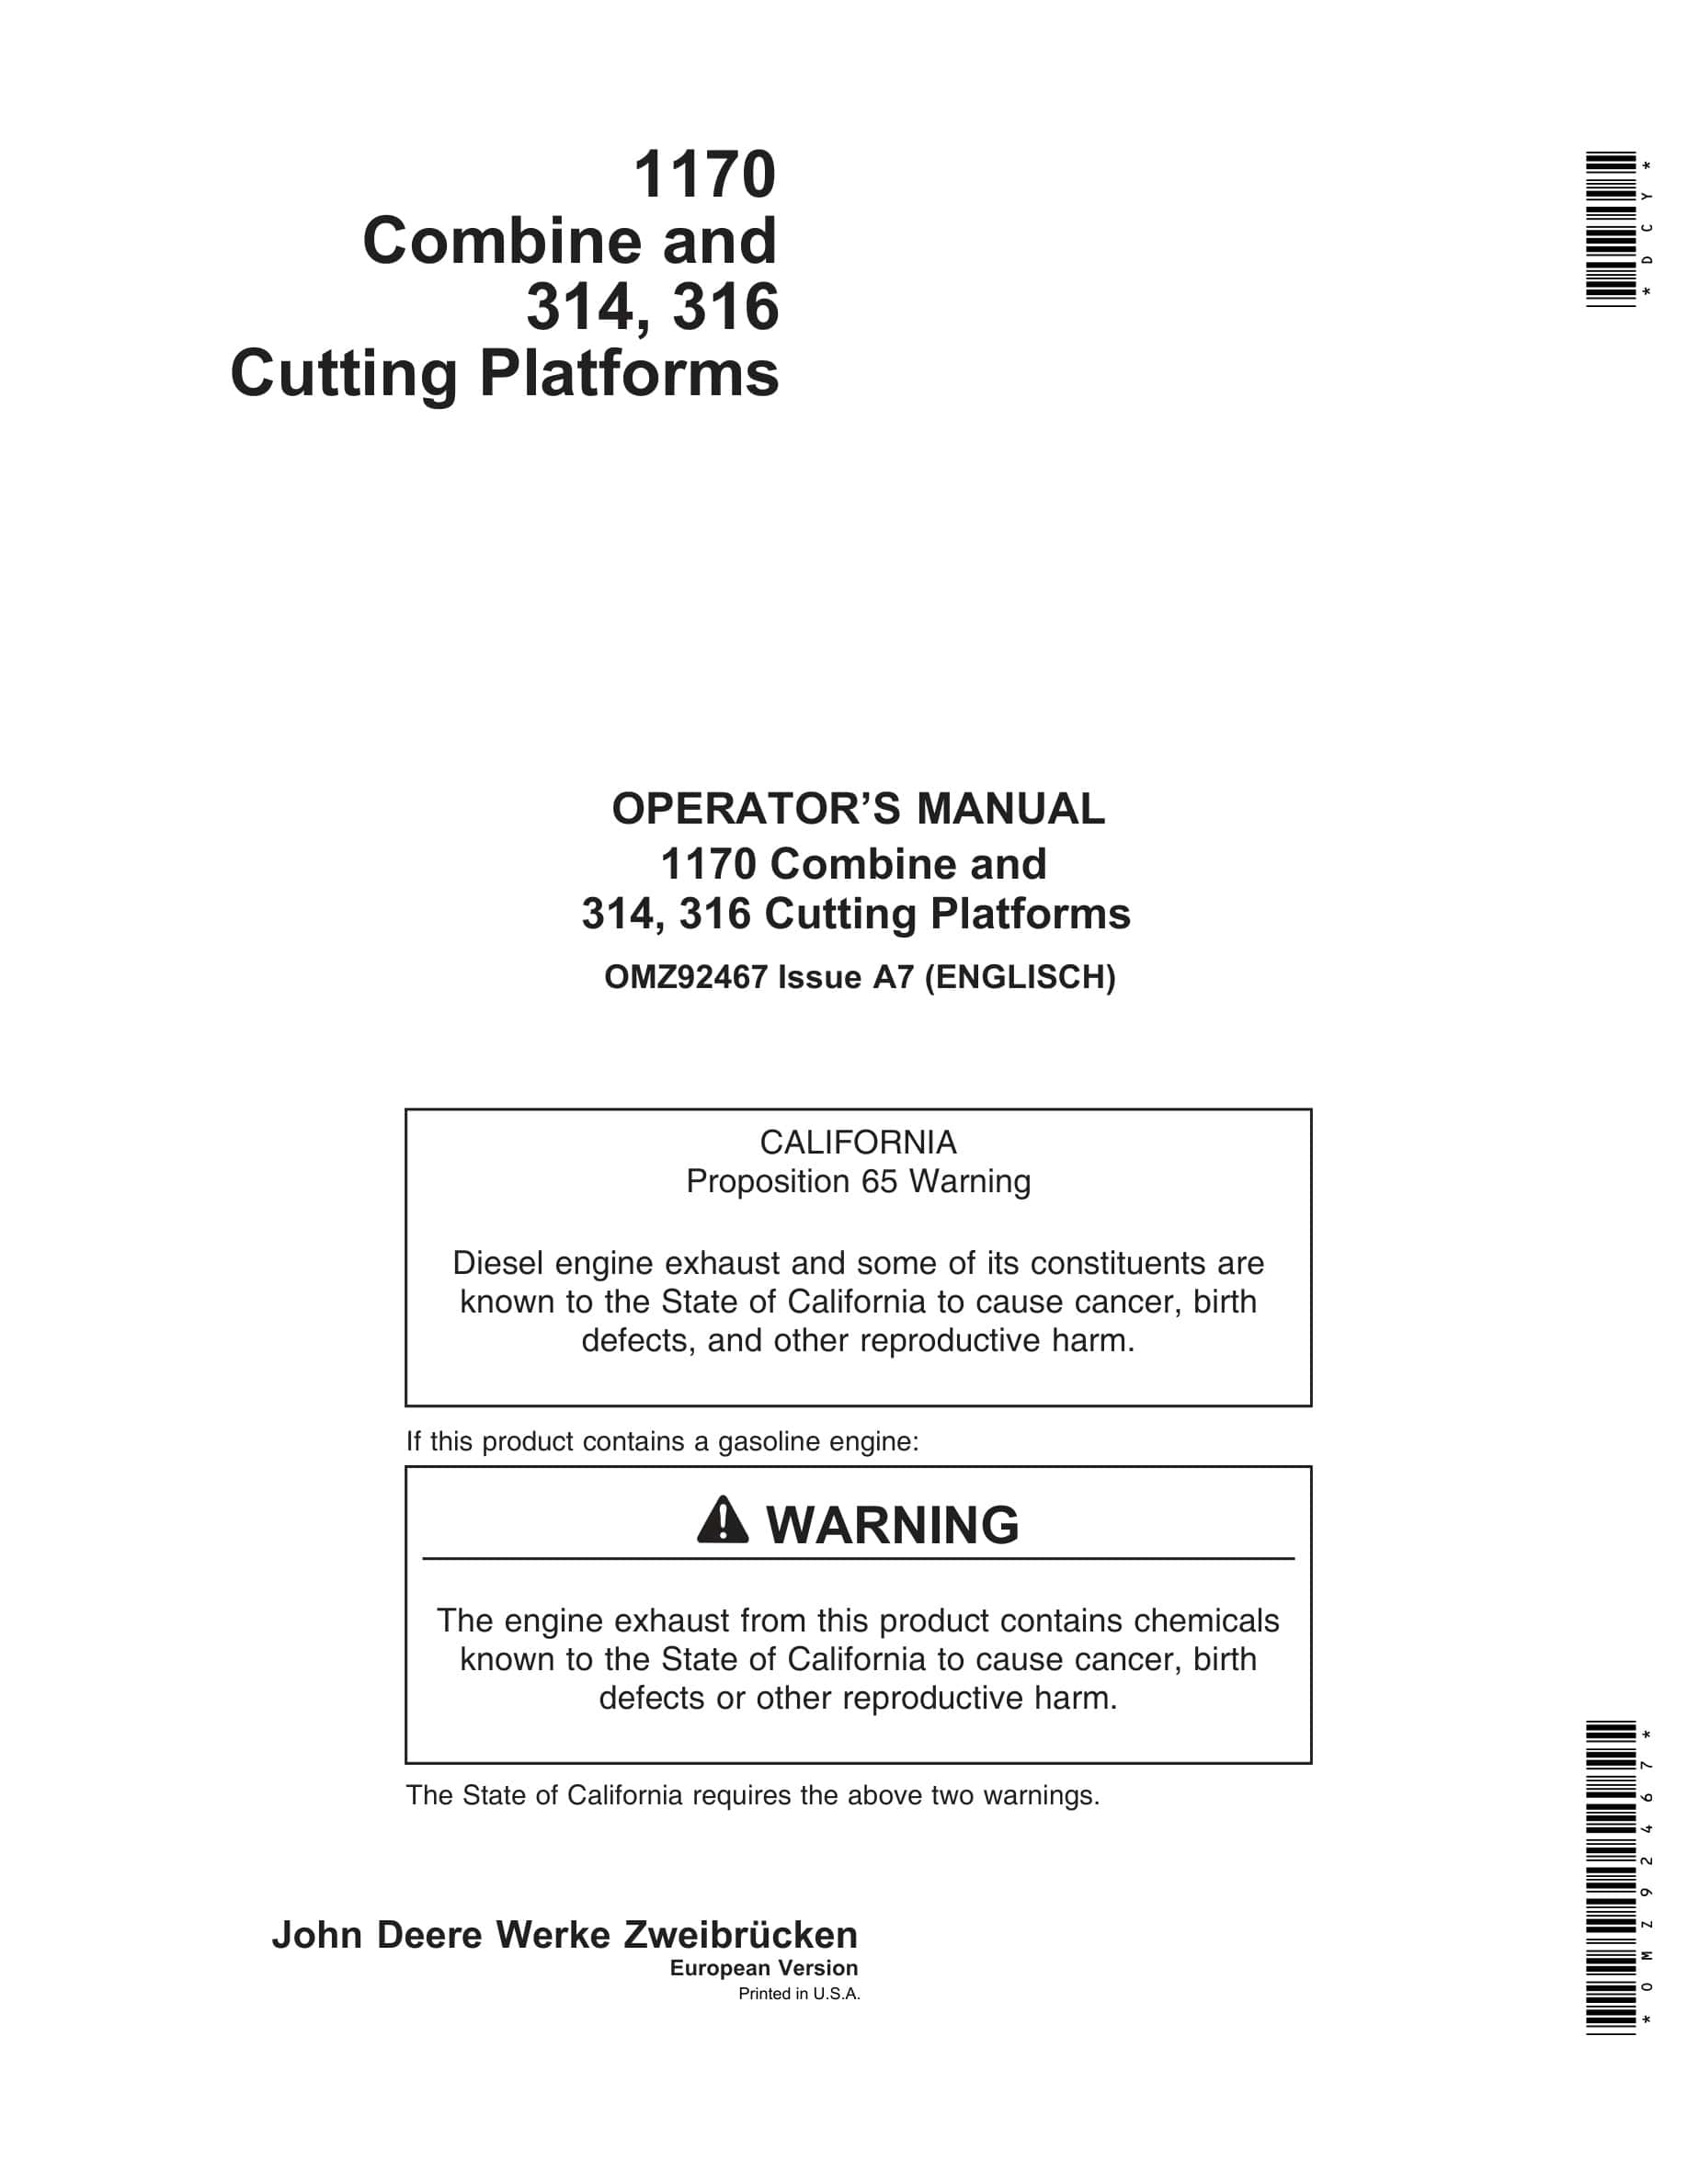 John Deere 1170 Combine and 314, 316 Cutting Platforms Operator Manual OMZ92467-1